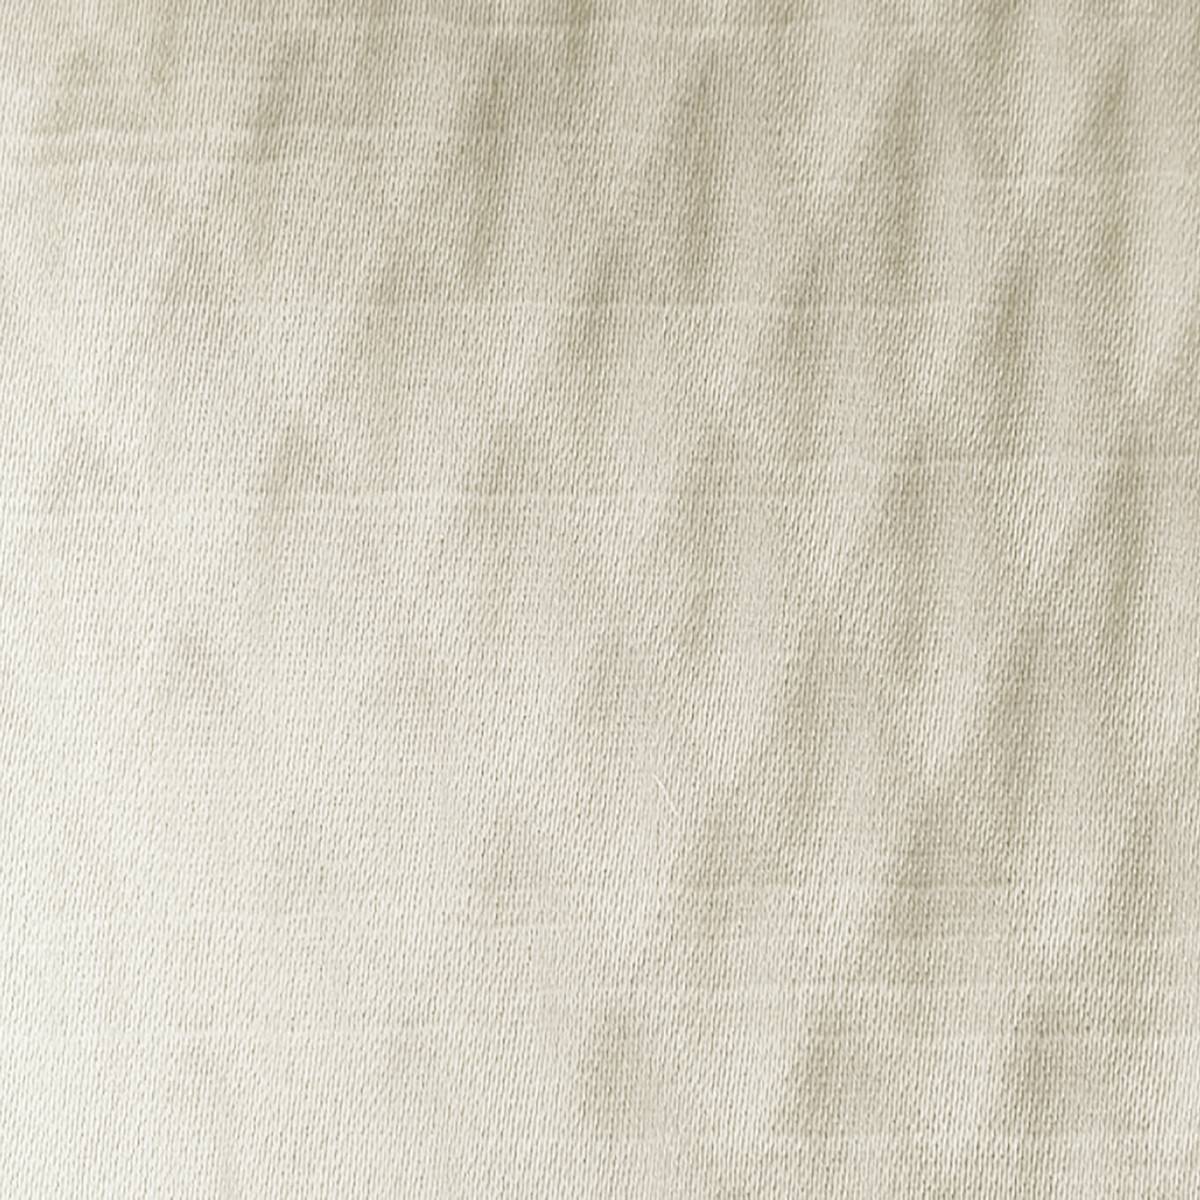 Alie Ivory Fabric by Ashley Wilde